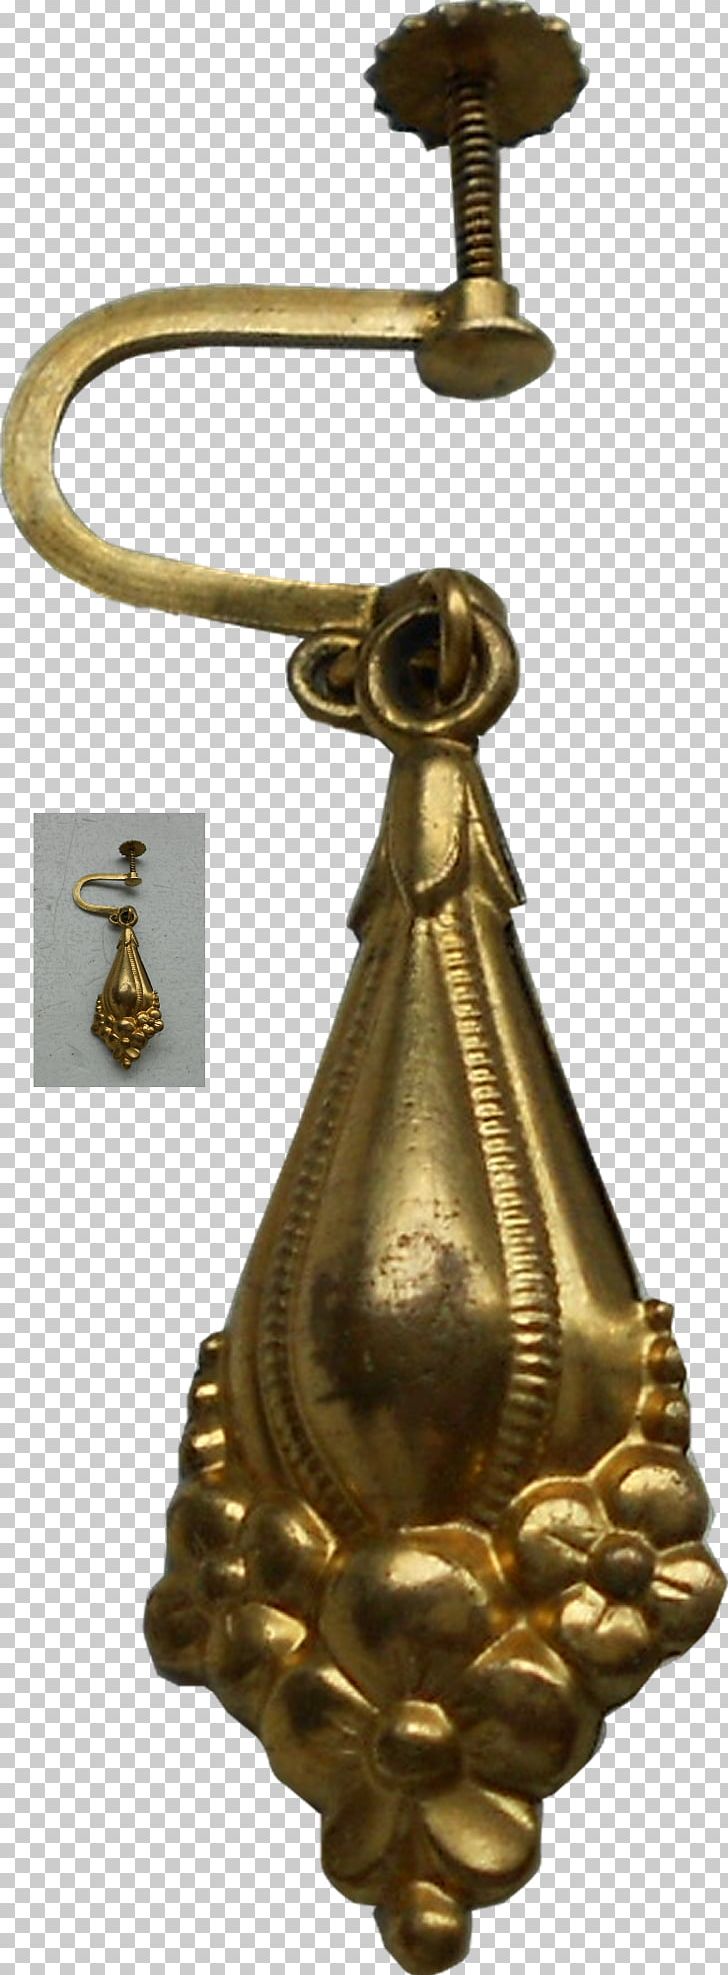 01504 Bronze Material Artifact Ghanta PNG, Clipart, 01504, Artifact, Brass, Bronze, Ghanta Free PNG Download